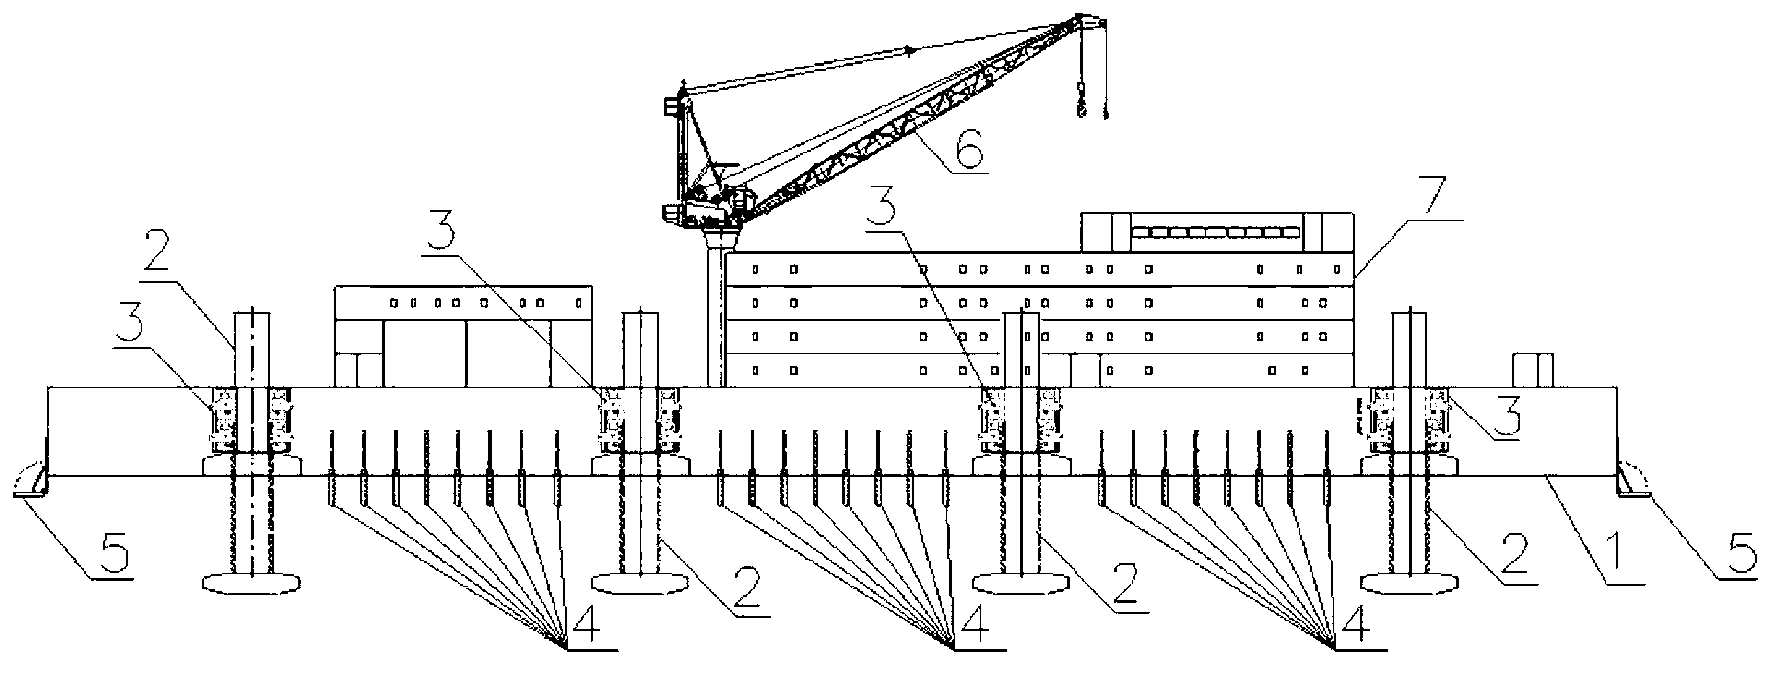 Construction method for artificial island platform